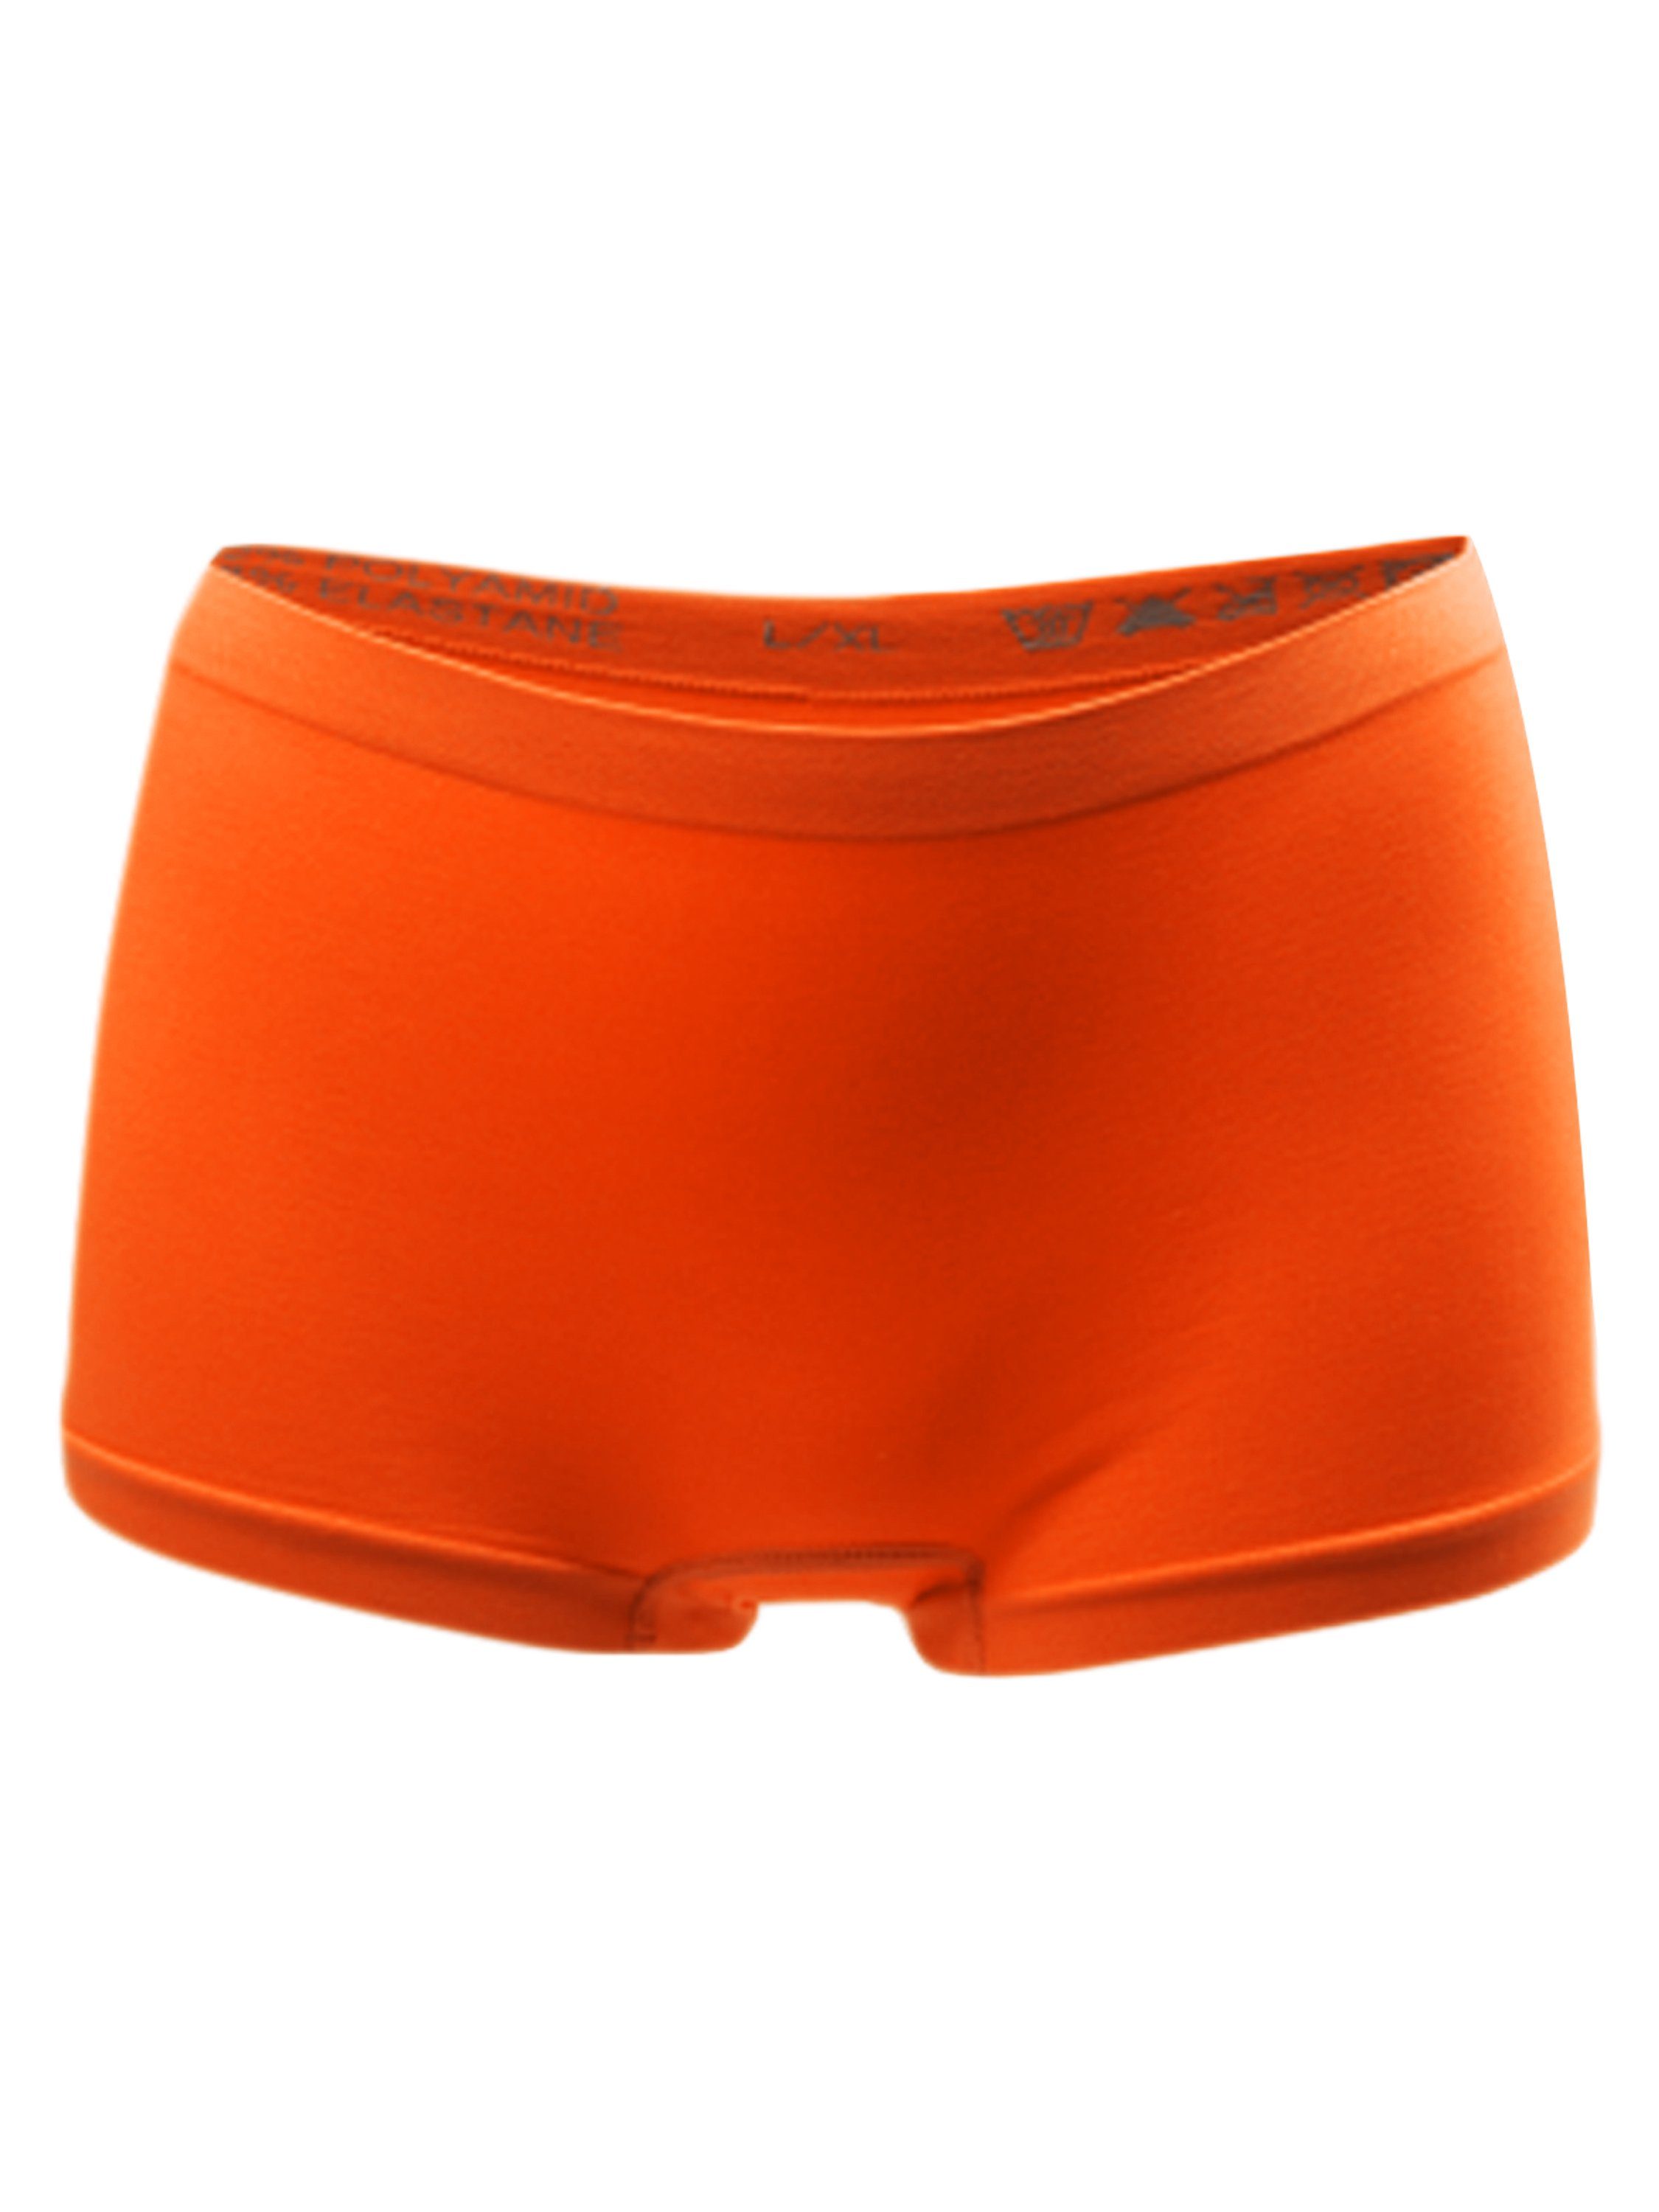 TEXEMP Panty 8er Pack Damen Slips Slip L/XL Schlüpfer (Spar-Pack, Microfaser S/M Hotpants Panty Panties Unterwäsche 8er-Pack)